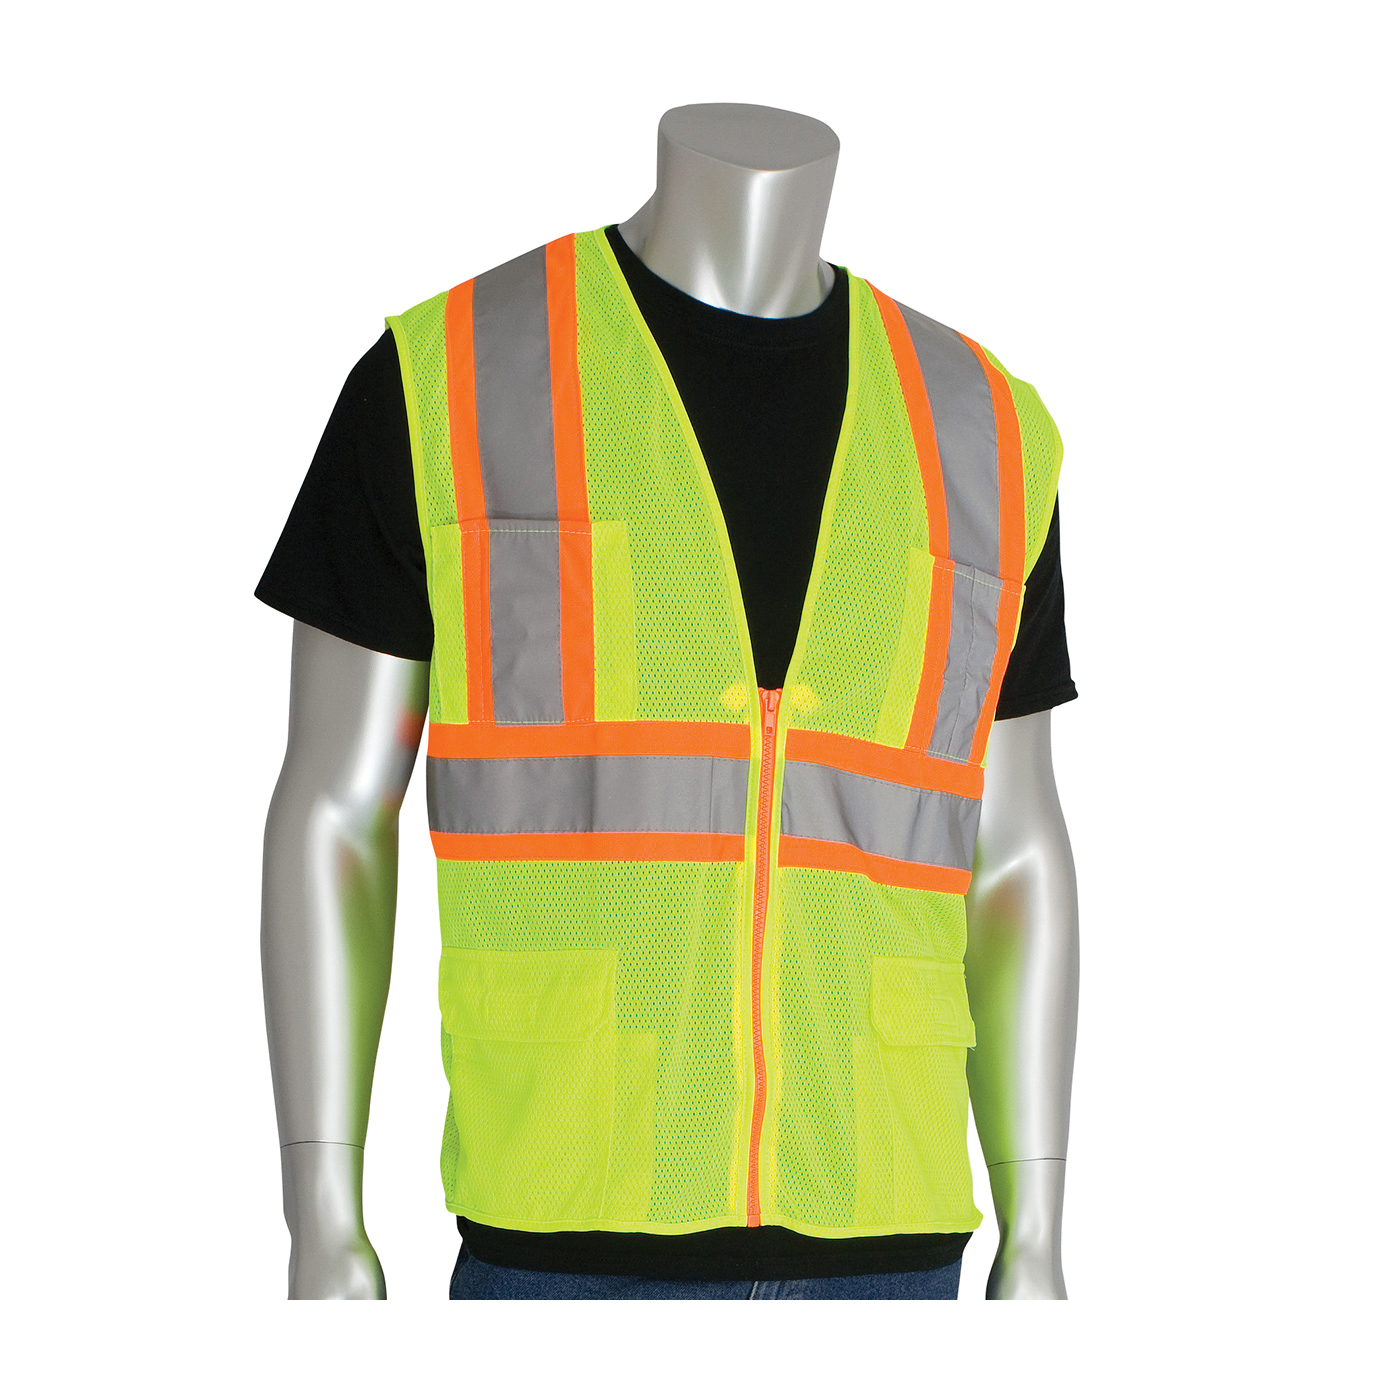 PIP® 302-MAPMLY-L 2-Tone Premium Surveyor Safety Vest, L, Hi-Viz Lime Yellow, Polyester, Zipper Closure, 11 Pockets, ANSI Class: Class 2, Specifications Met: ANSI 107 Type R